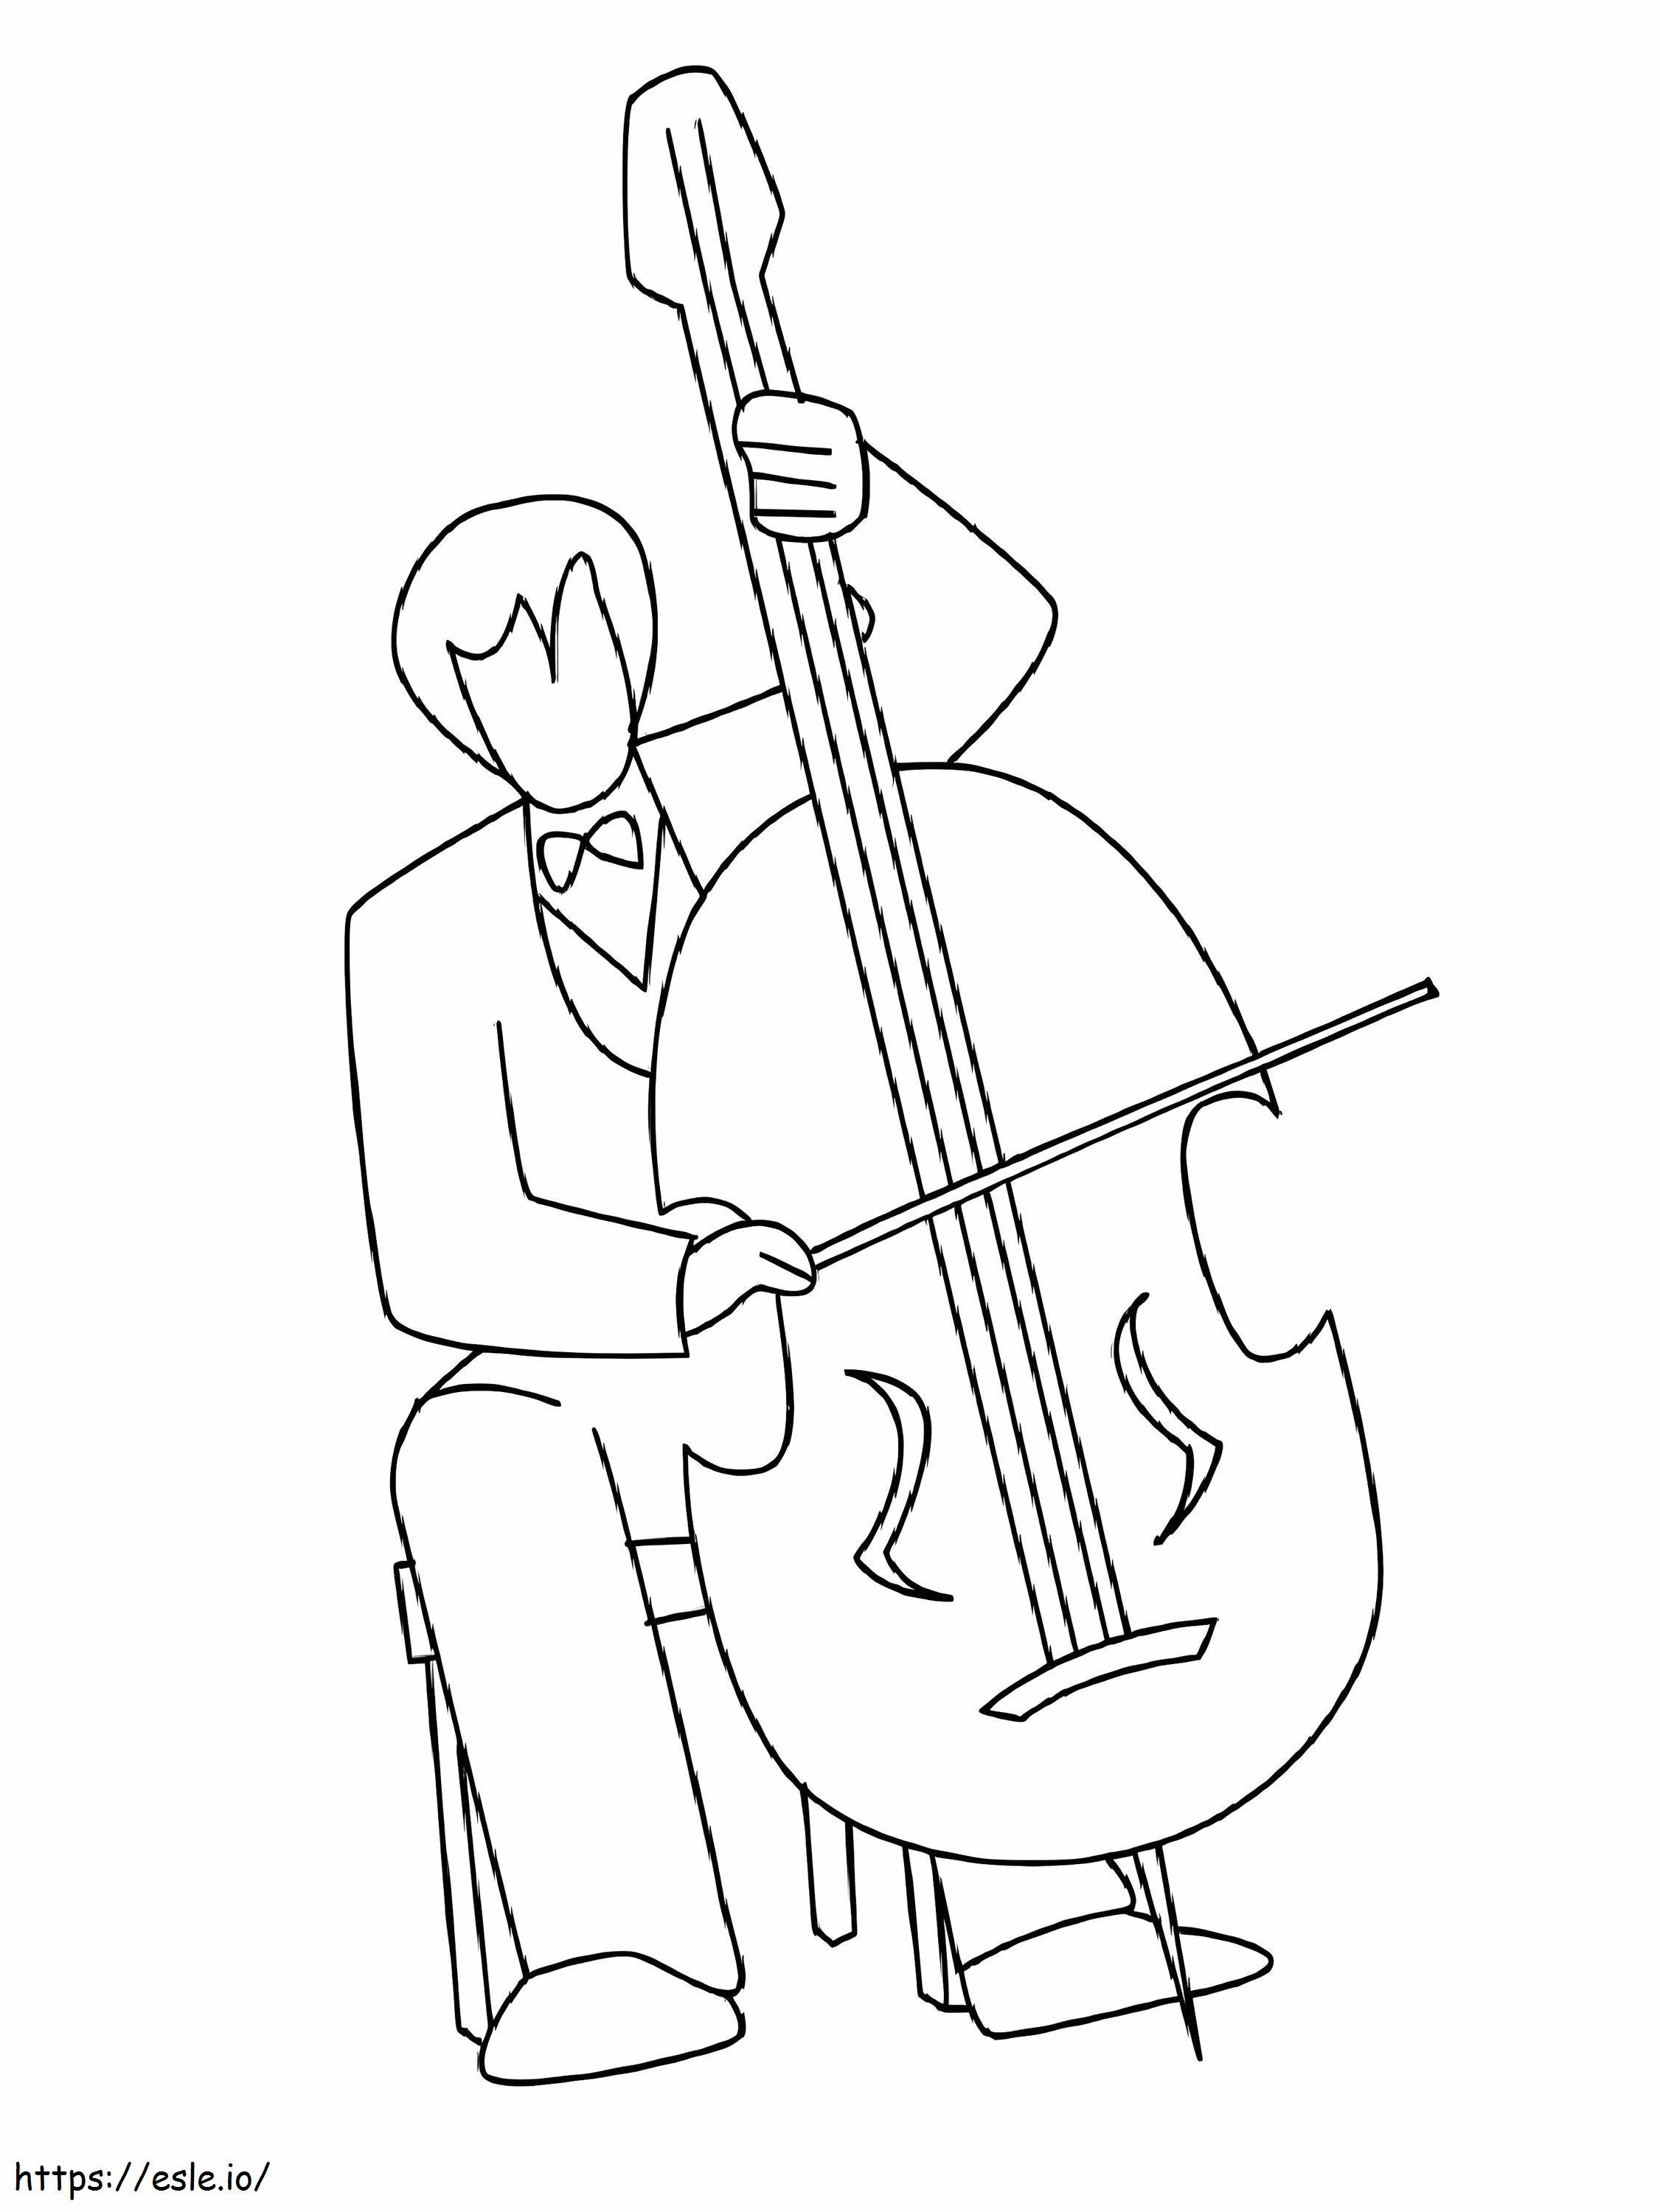 Bermain Cello Gambar Mewarnai